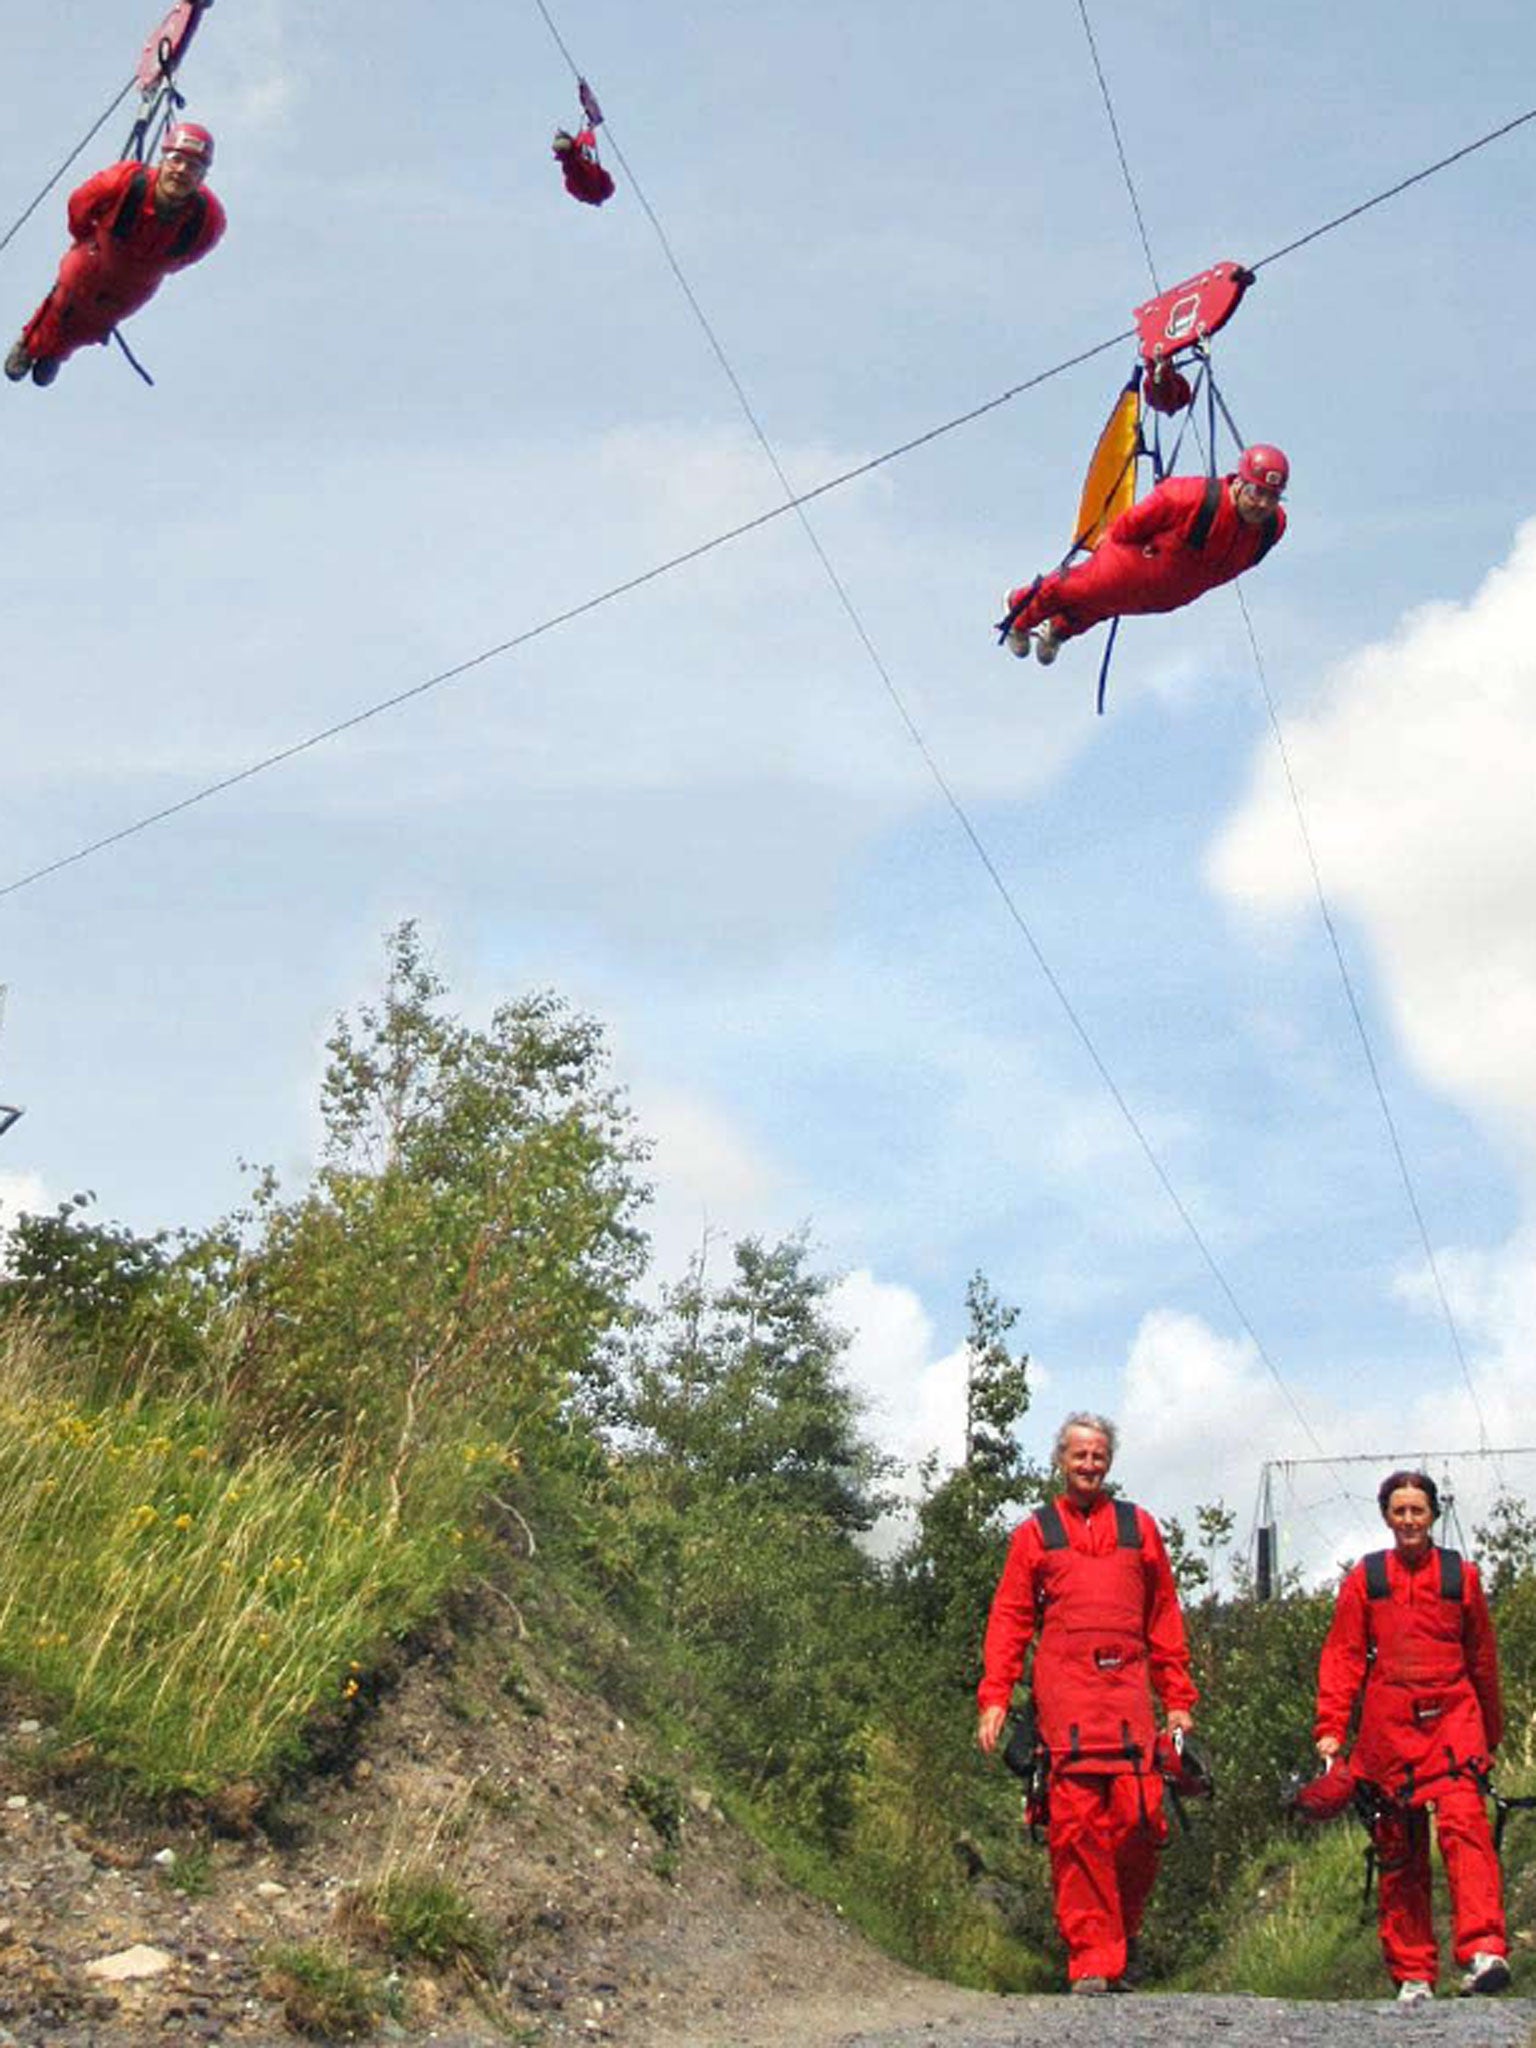 Europe's longest zipline can be found at Zip World in Snowdonia